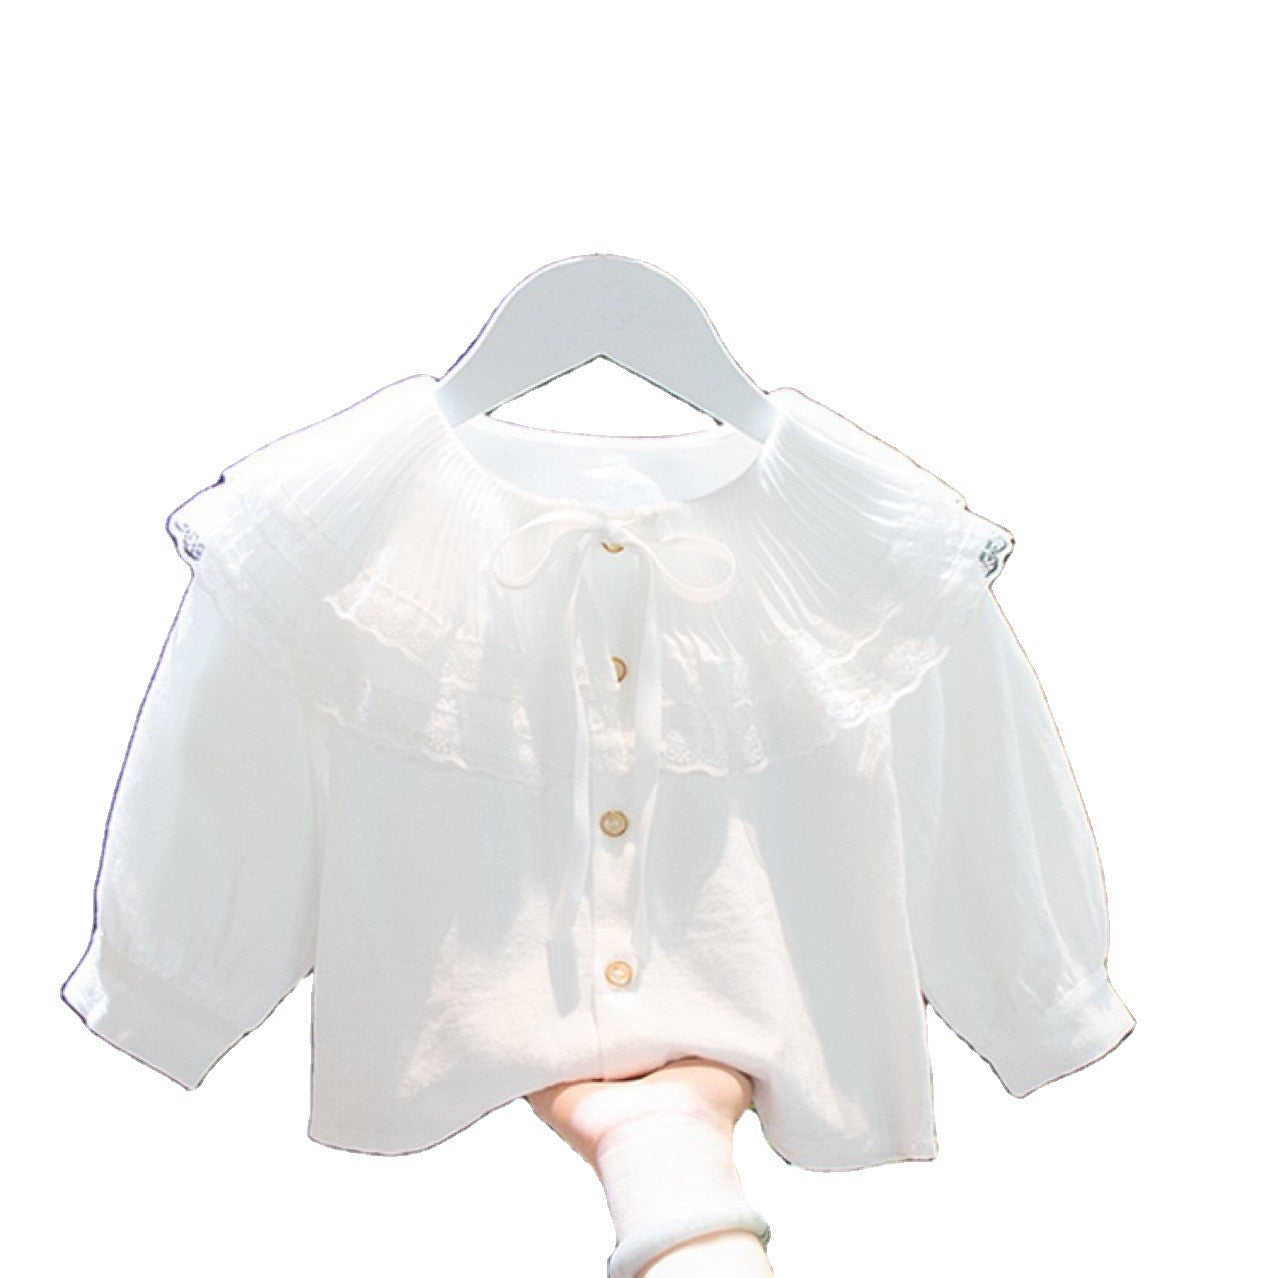 Baby Girl Fashion Style Vest Dress Spring Autumn New Infant Children Toddler Denim Skirt + Shirt 2 Piece Sets Toddler Outfits - BTGO8398